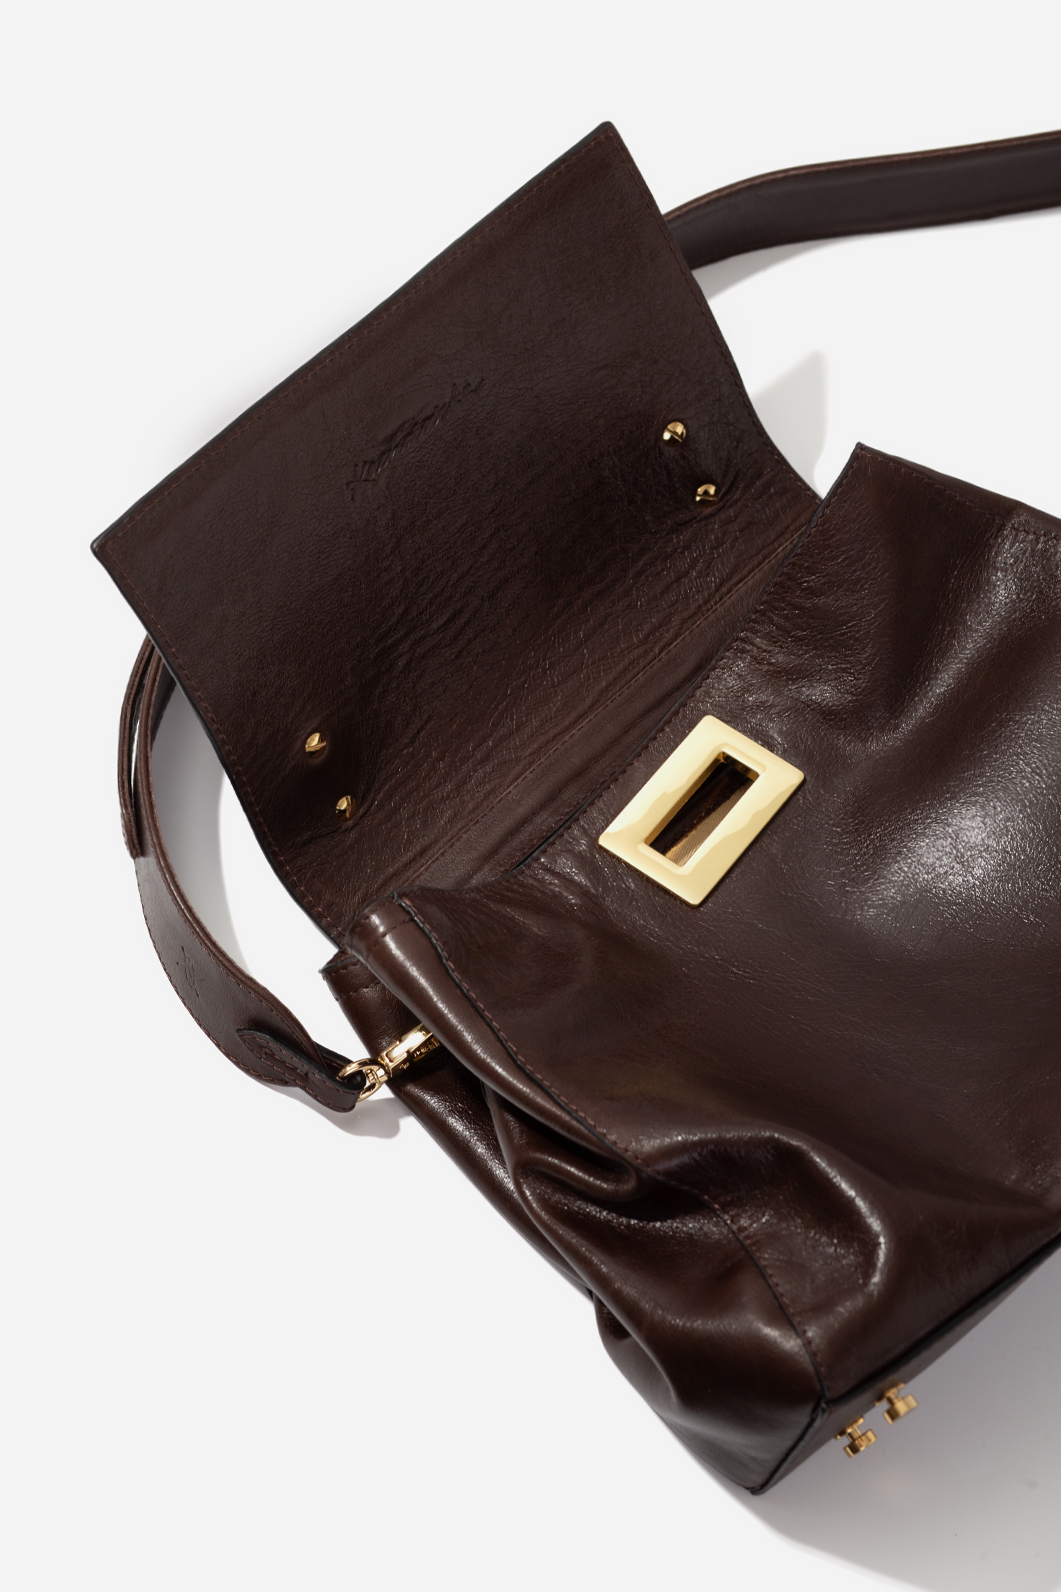 ERNA SOFT dark brown bag /gold/